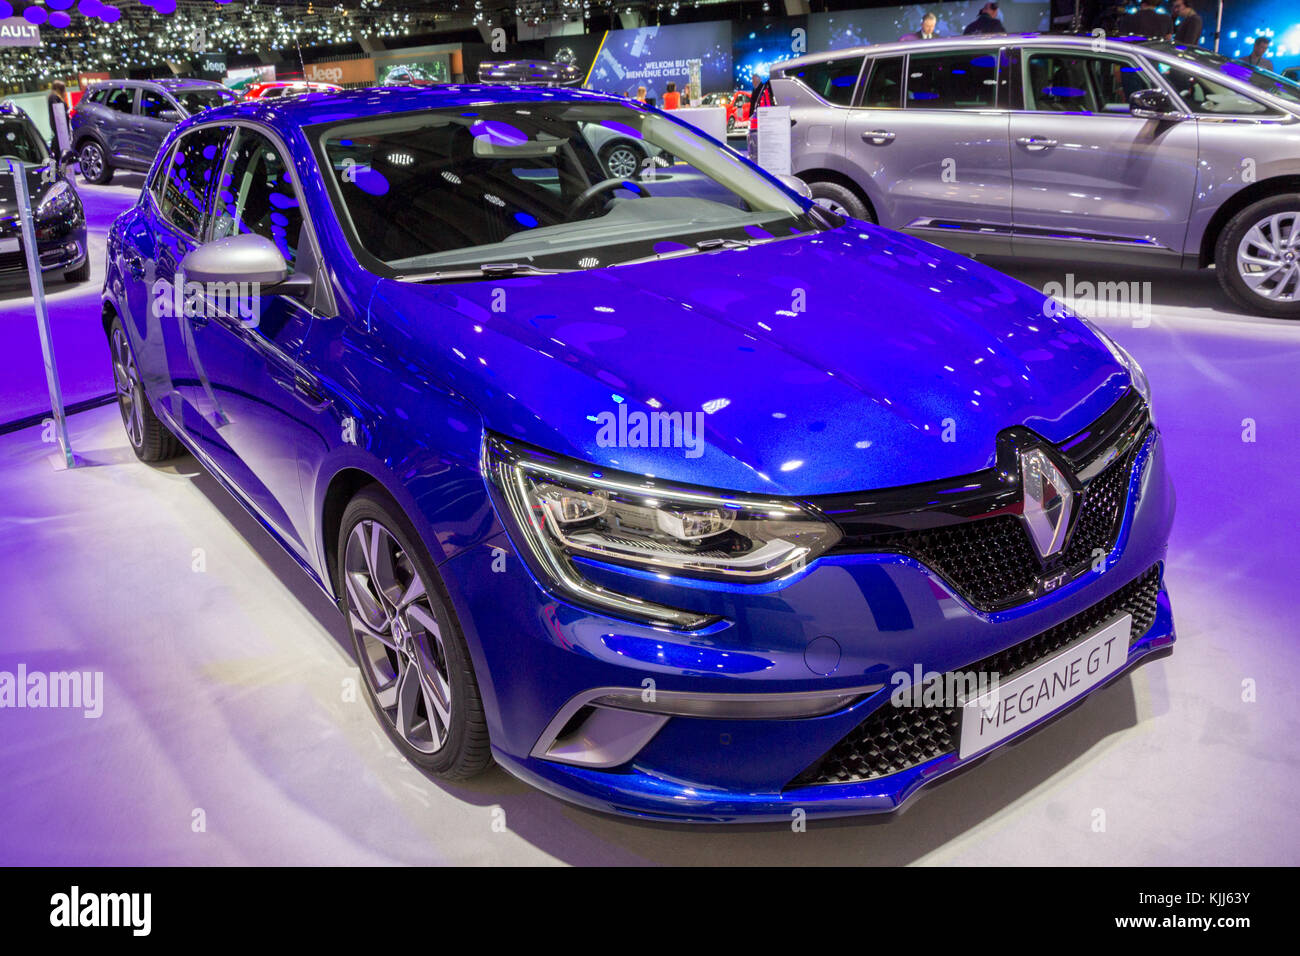 Renault megane gt hi-res stock photography images - Alamy